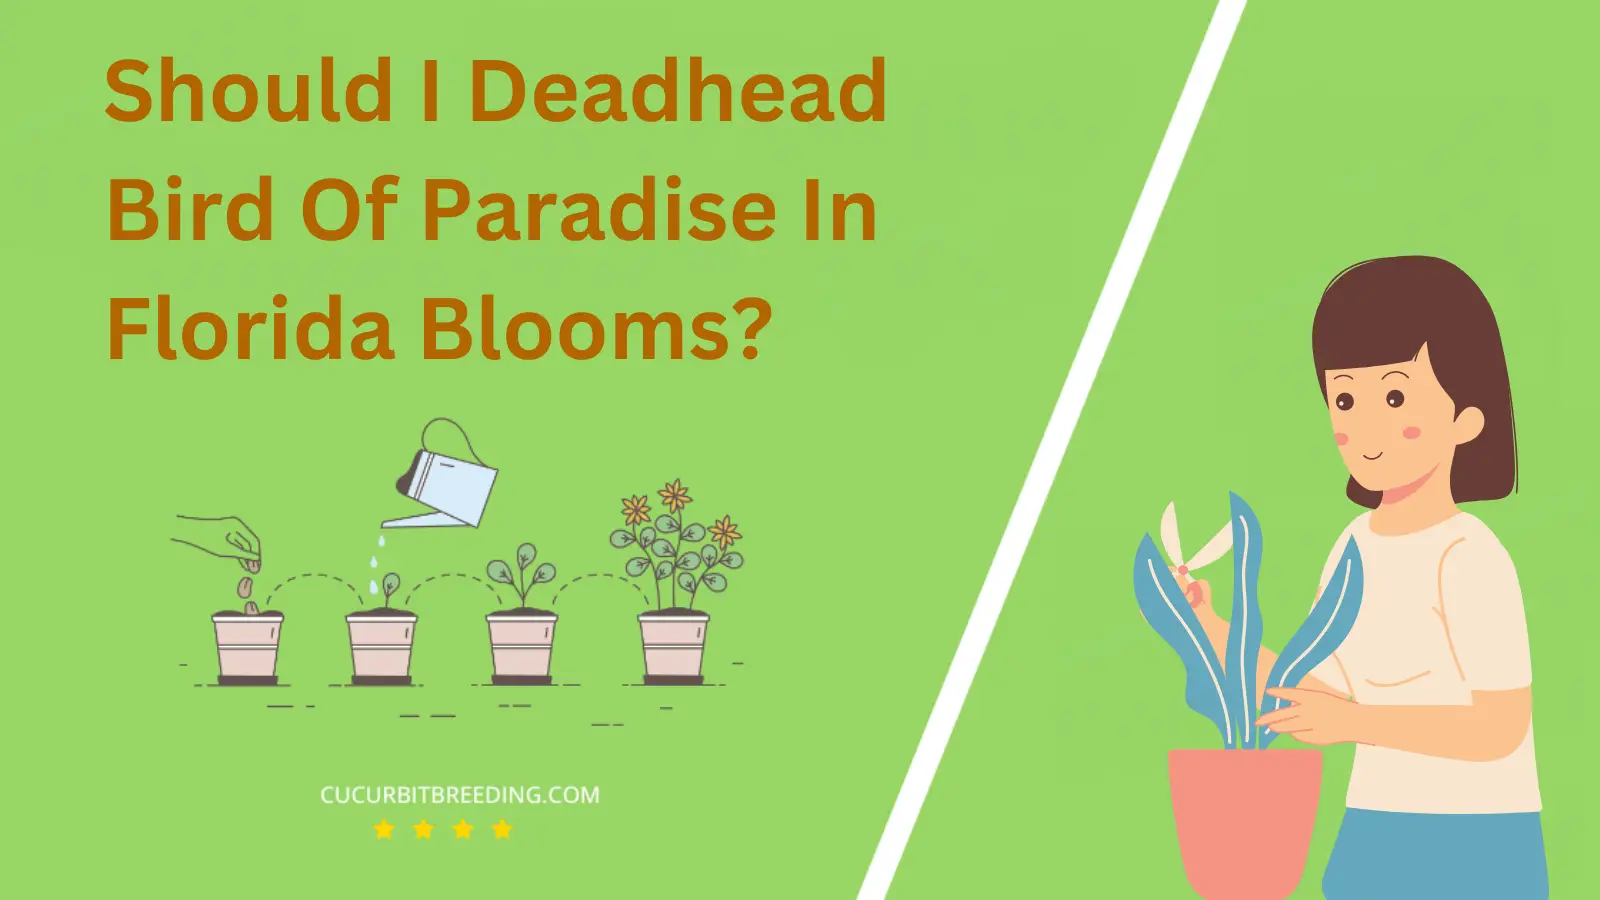 Should I Deadhead Bird Of Paradise In Florida Blooms?